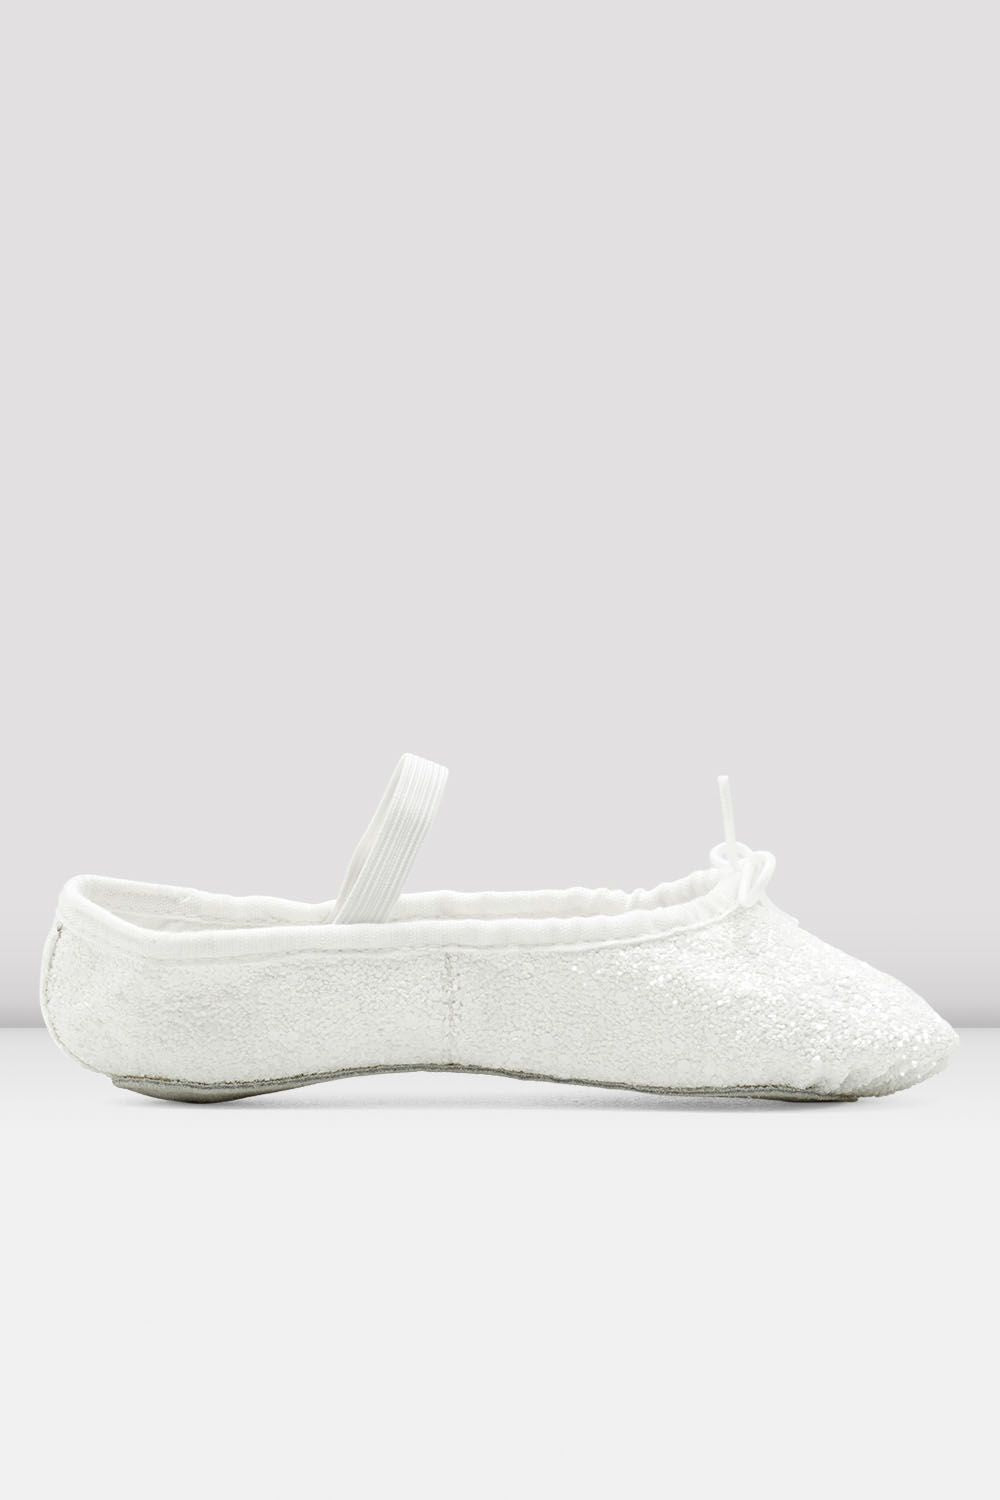 BLOCH Childrens Sparkle Ballet Shoes, White Glitter